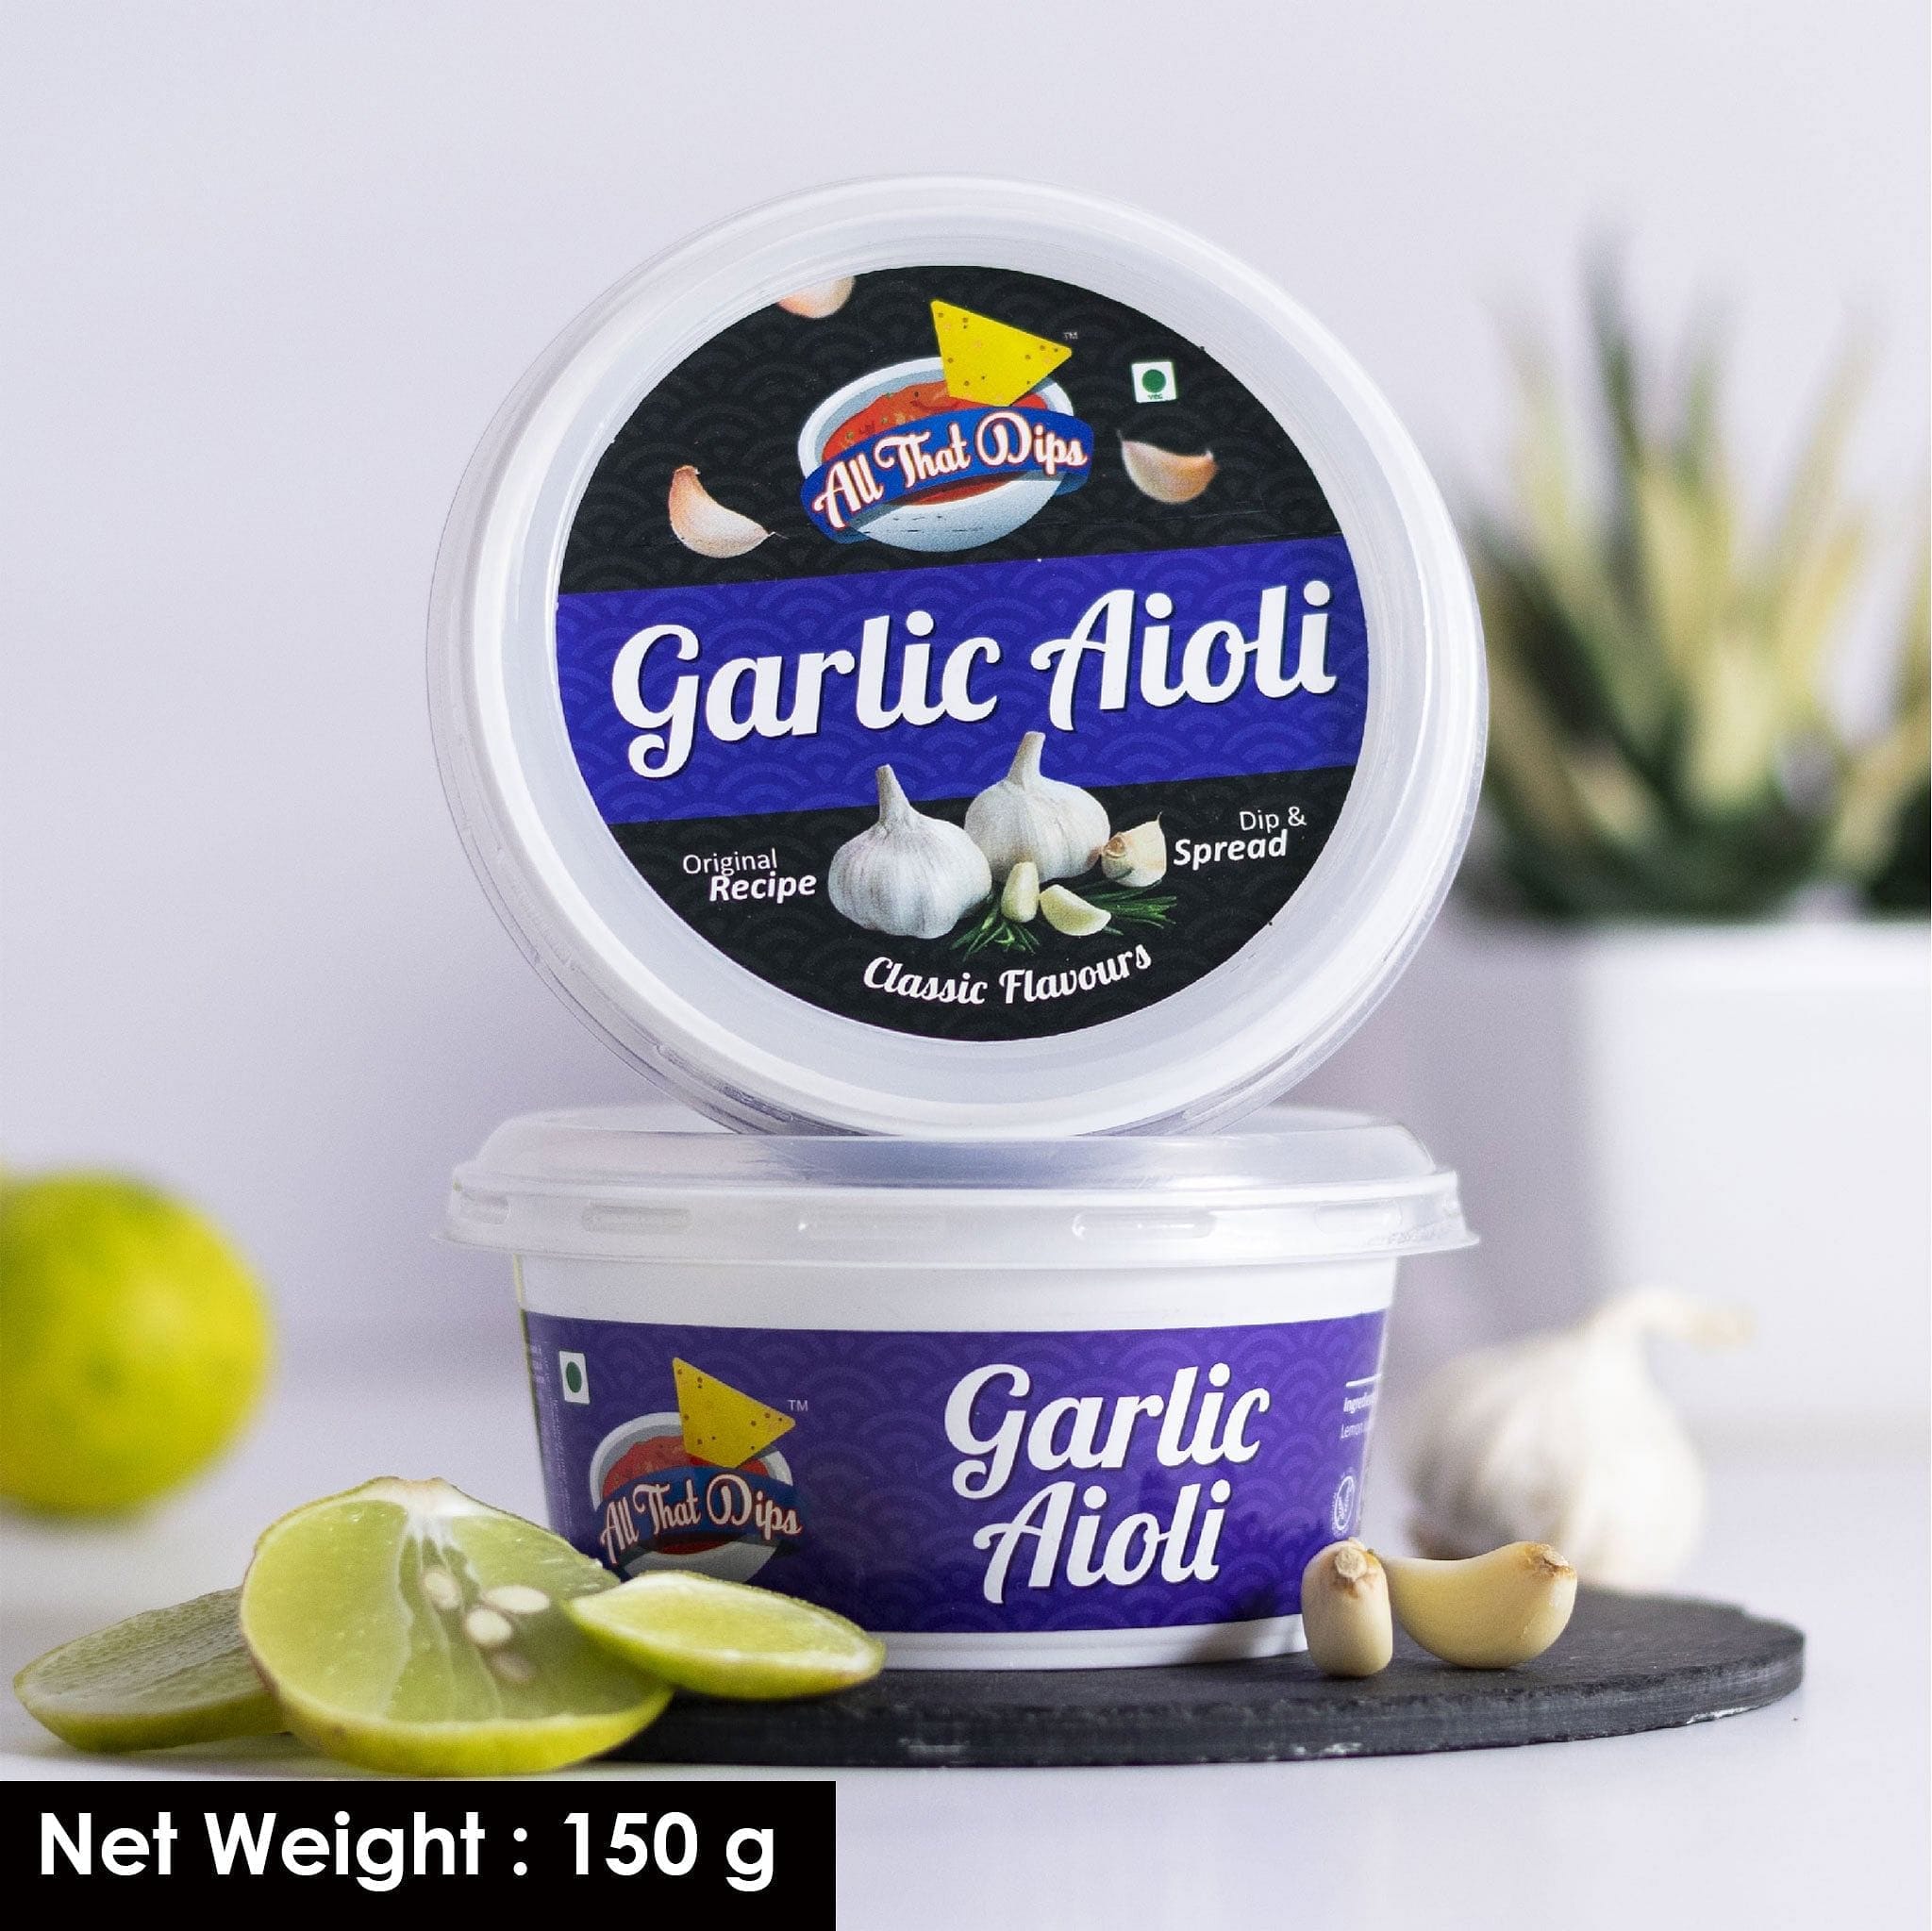 Buy All That Dips Garlic Aioli Dip | Creamy & Rich - Bechef